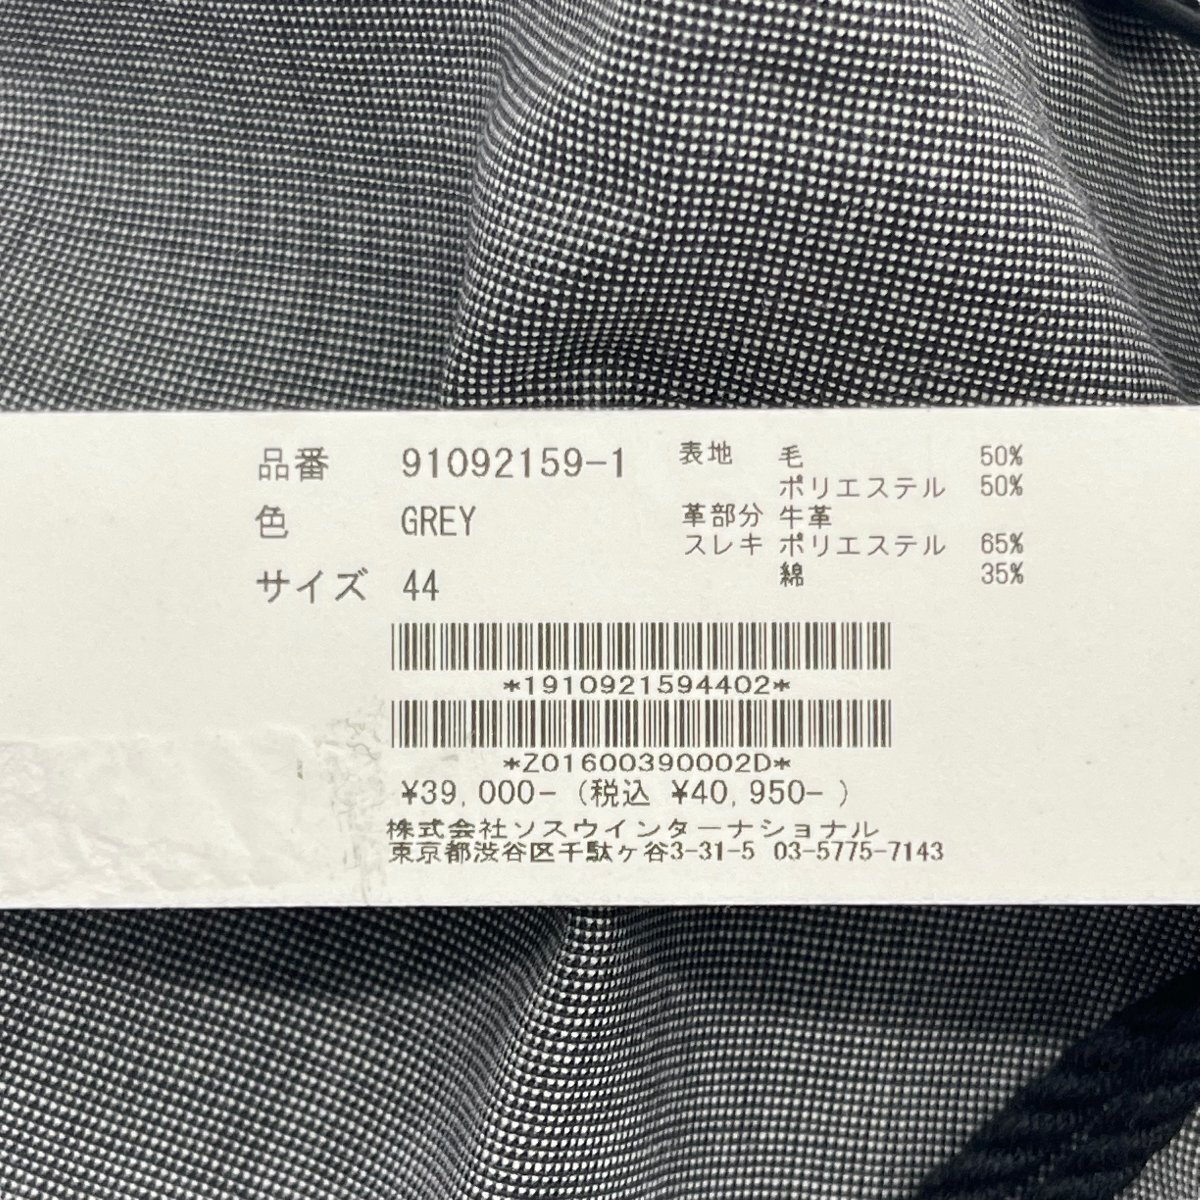 A929# tag equipped #MIHARAYASUHIRO Mihara Yasuhiro # tax included 40950 jpy # pants #91092159#44 size 